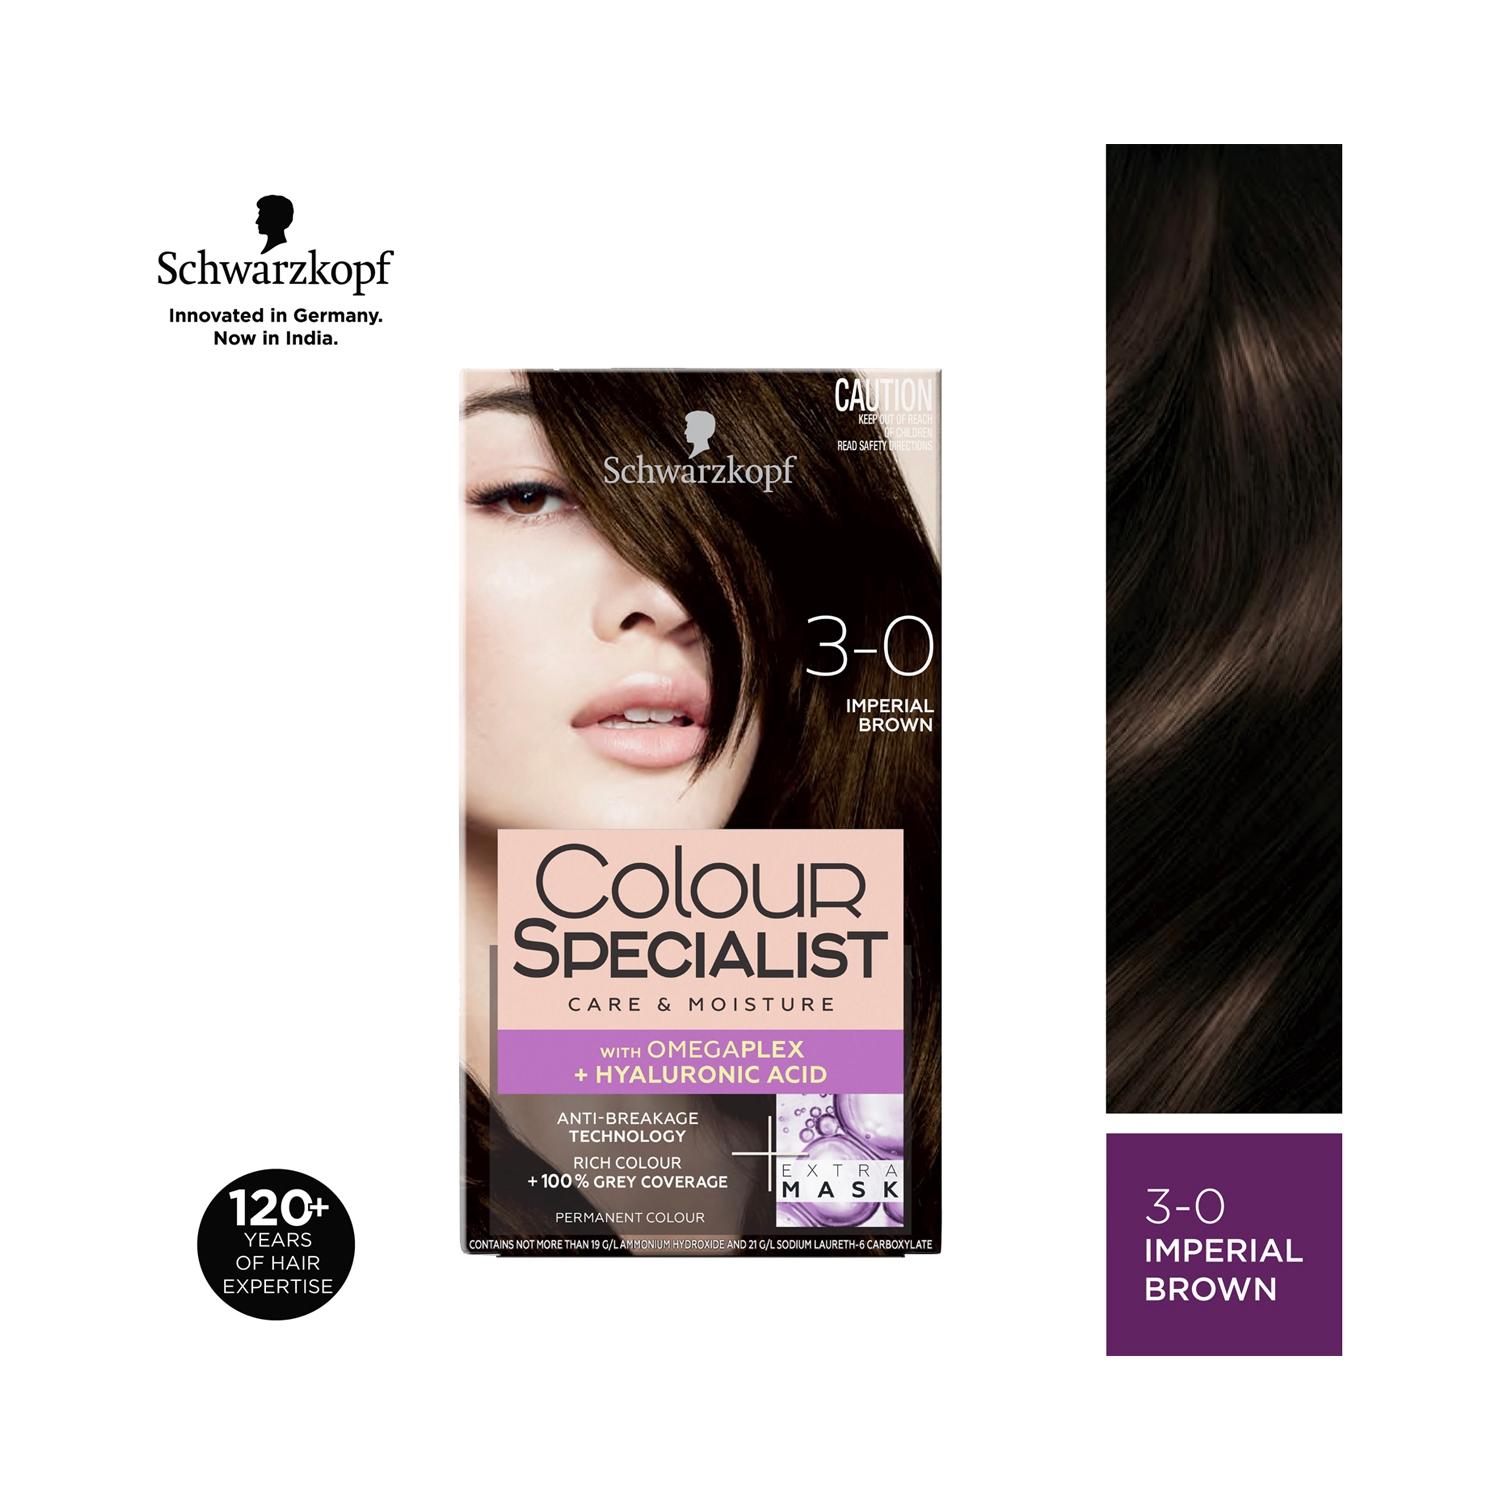 Schwarzkopf Colour Specialist Permanent Hair Colour - 3.0 Imperial Brown (165ml)